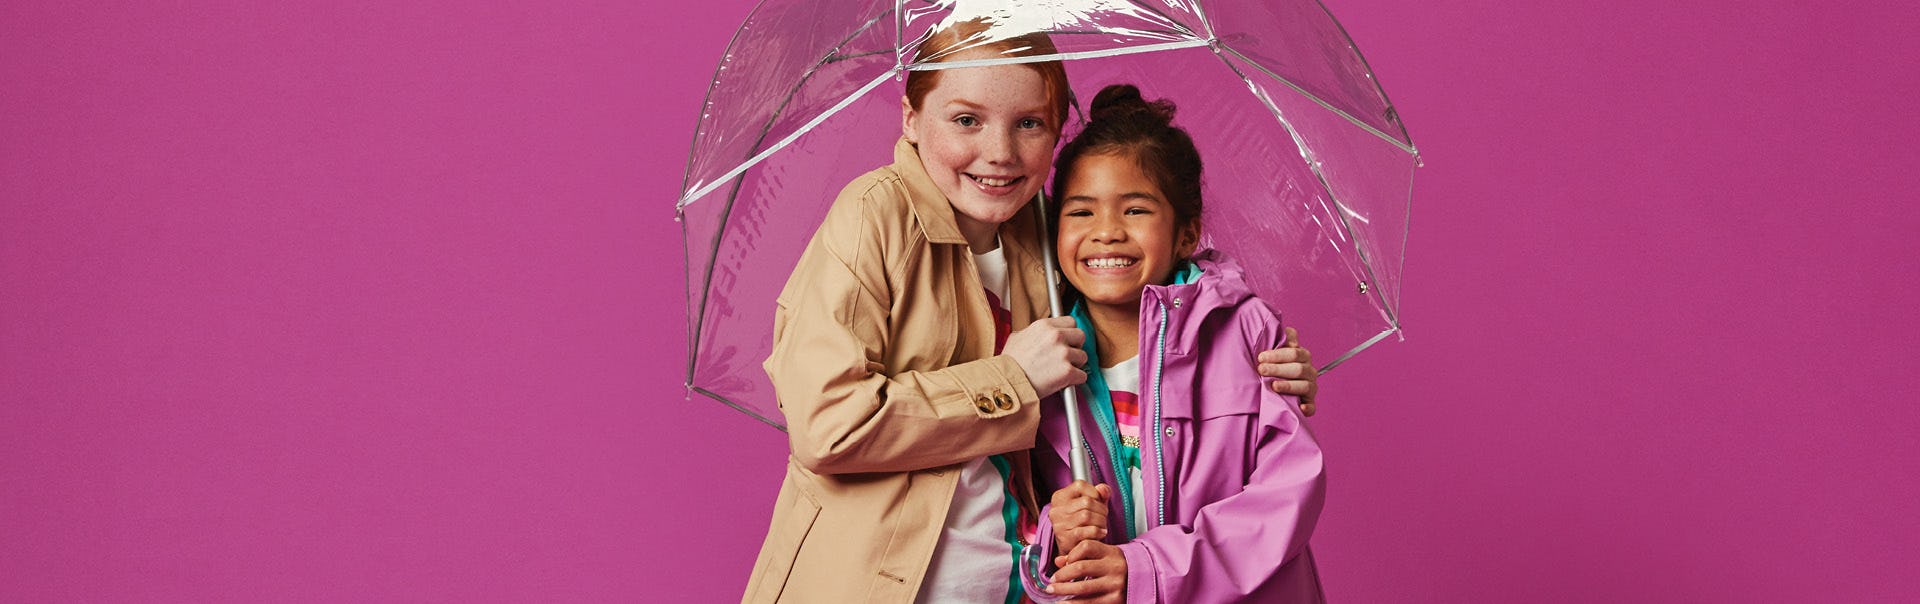 girls with umbrella